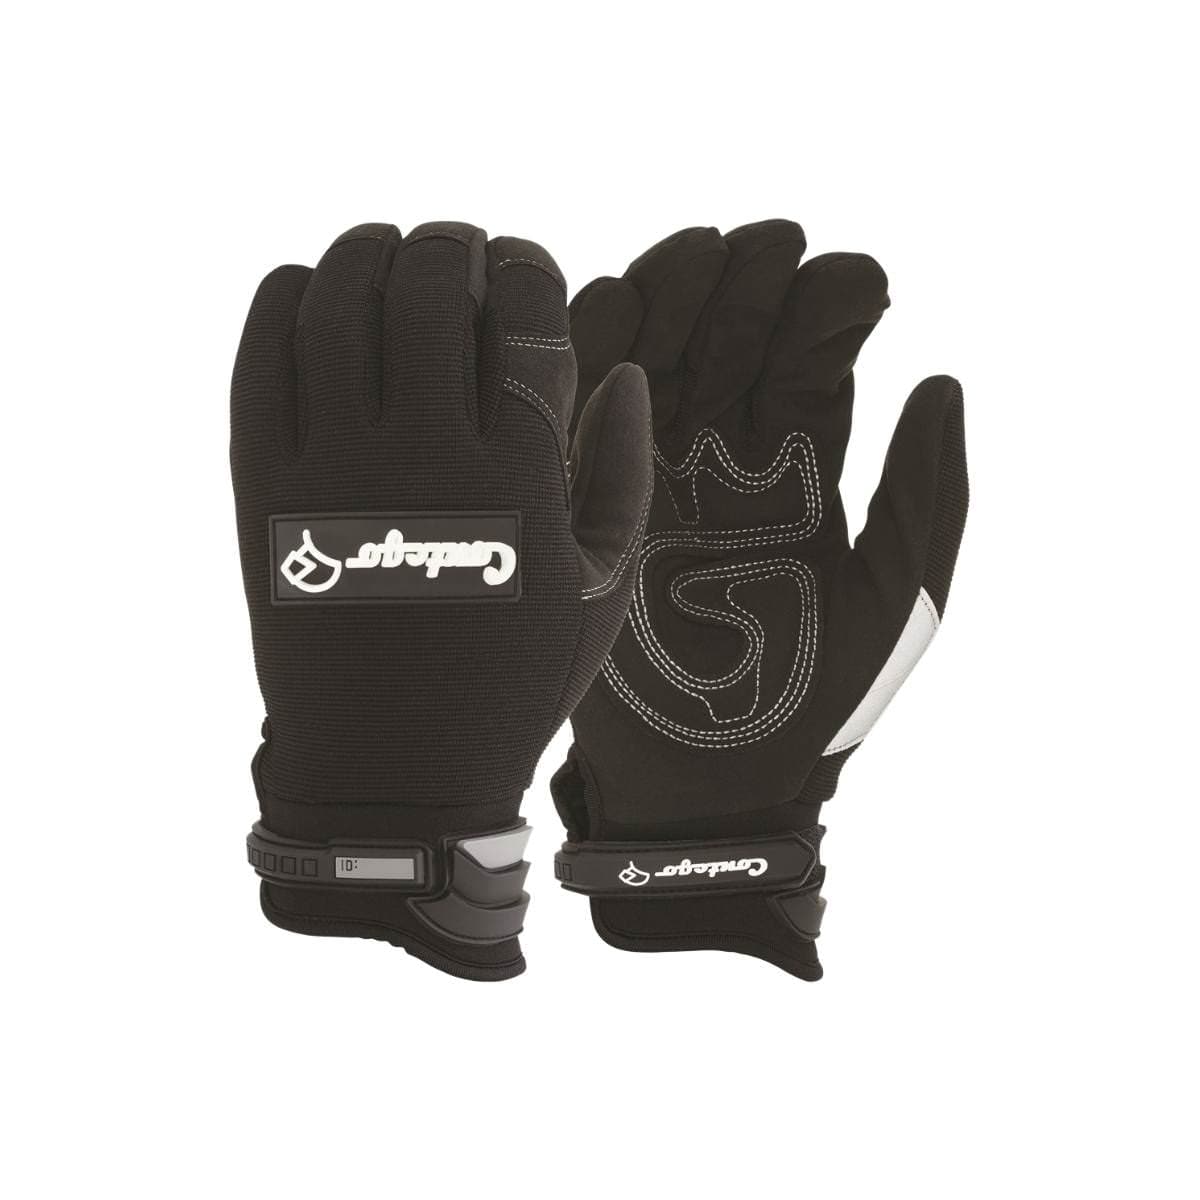 Contego Original Mech Grip Tab Glove - P8174 (Pair)